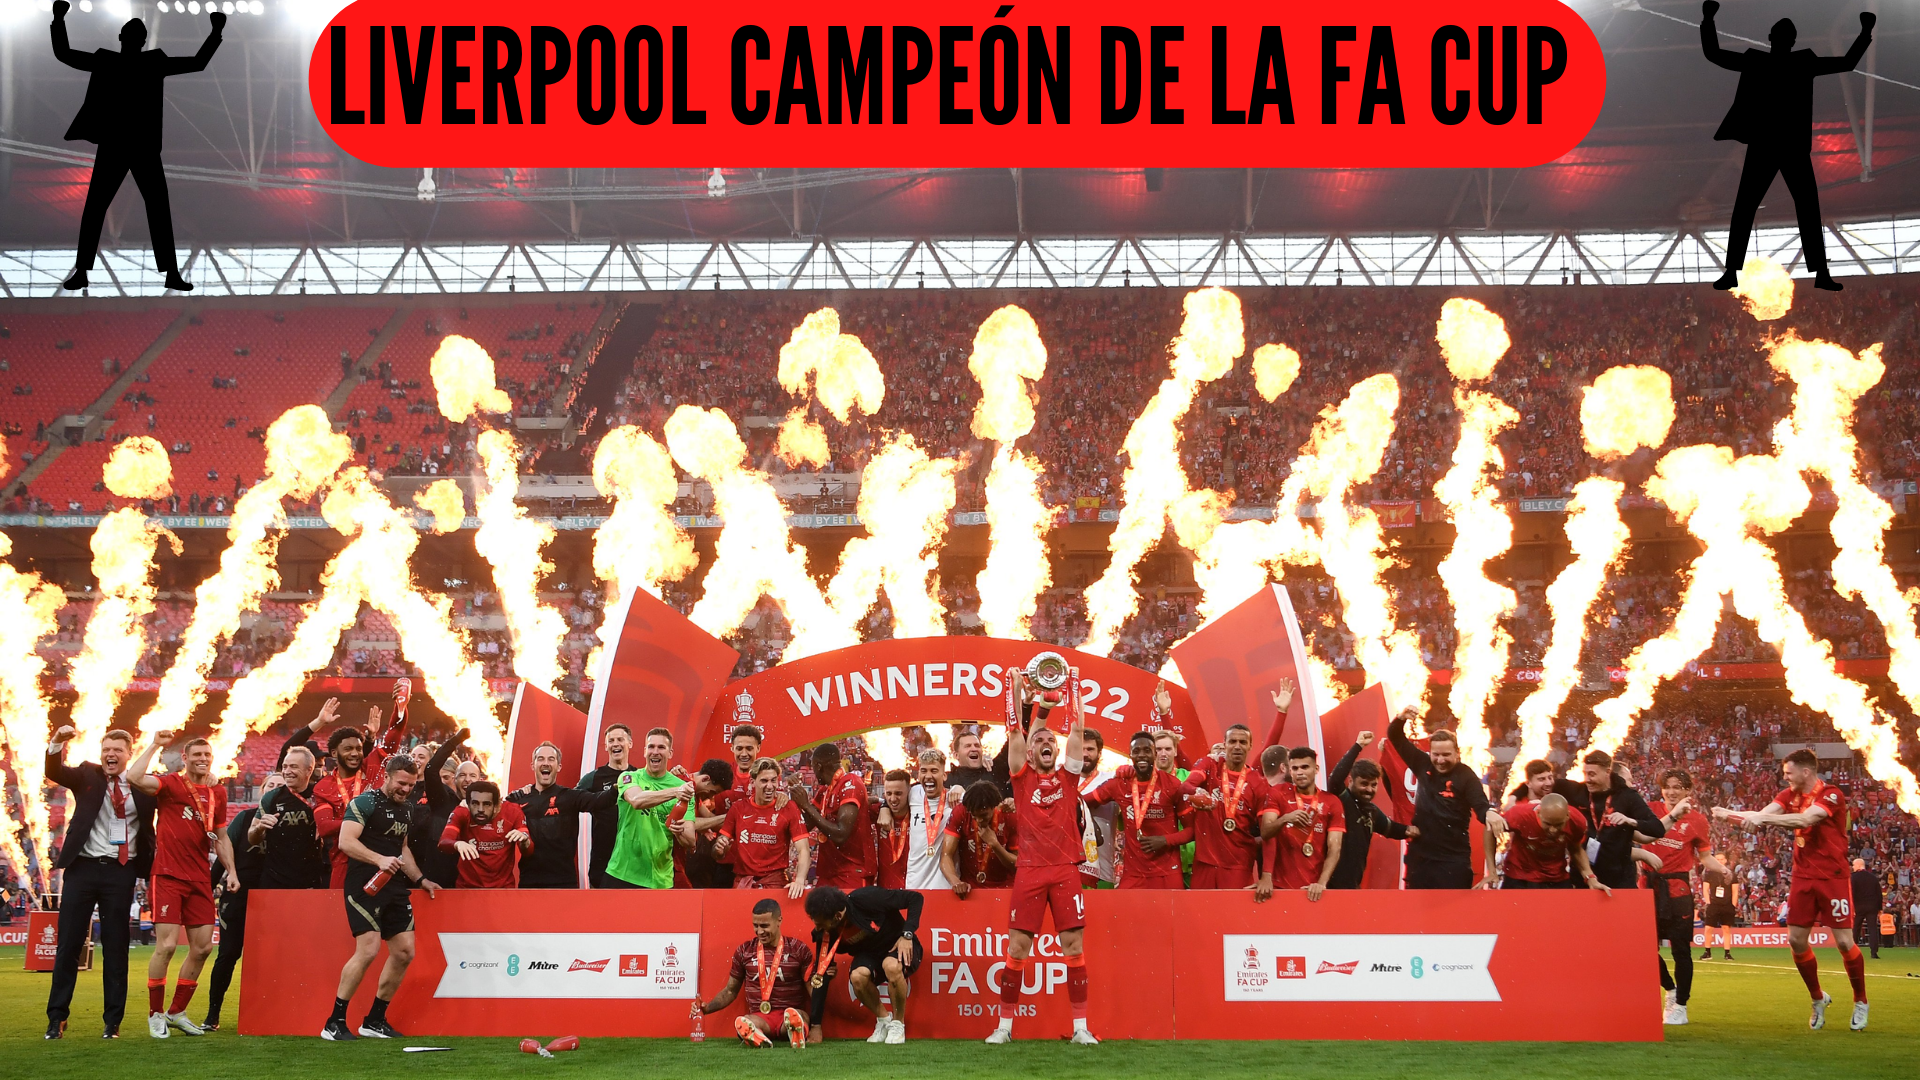 Liverpool campeón de la FA Cup.png